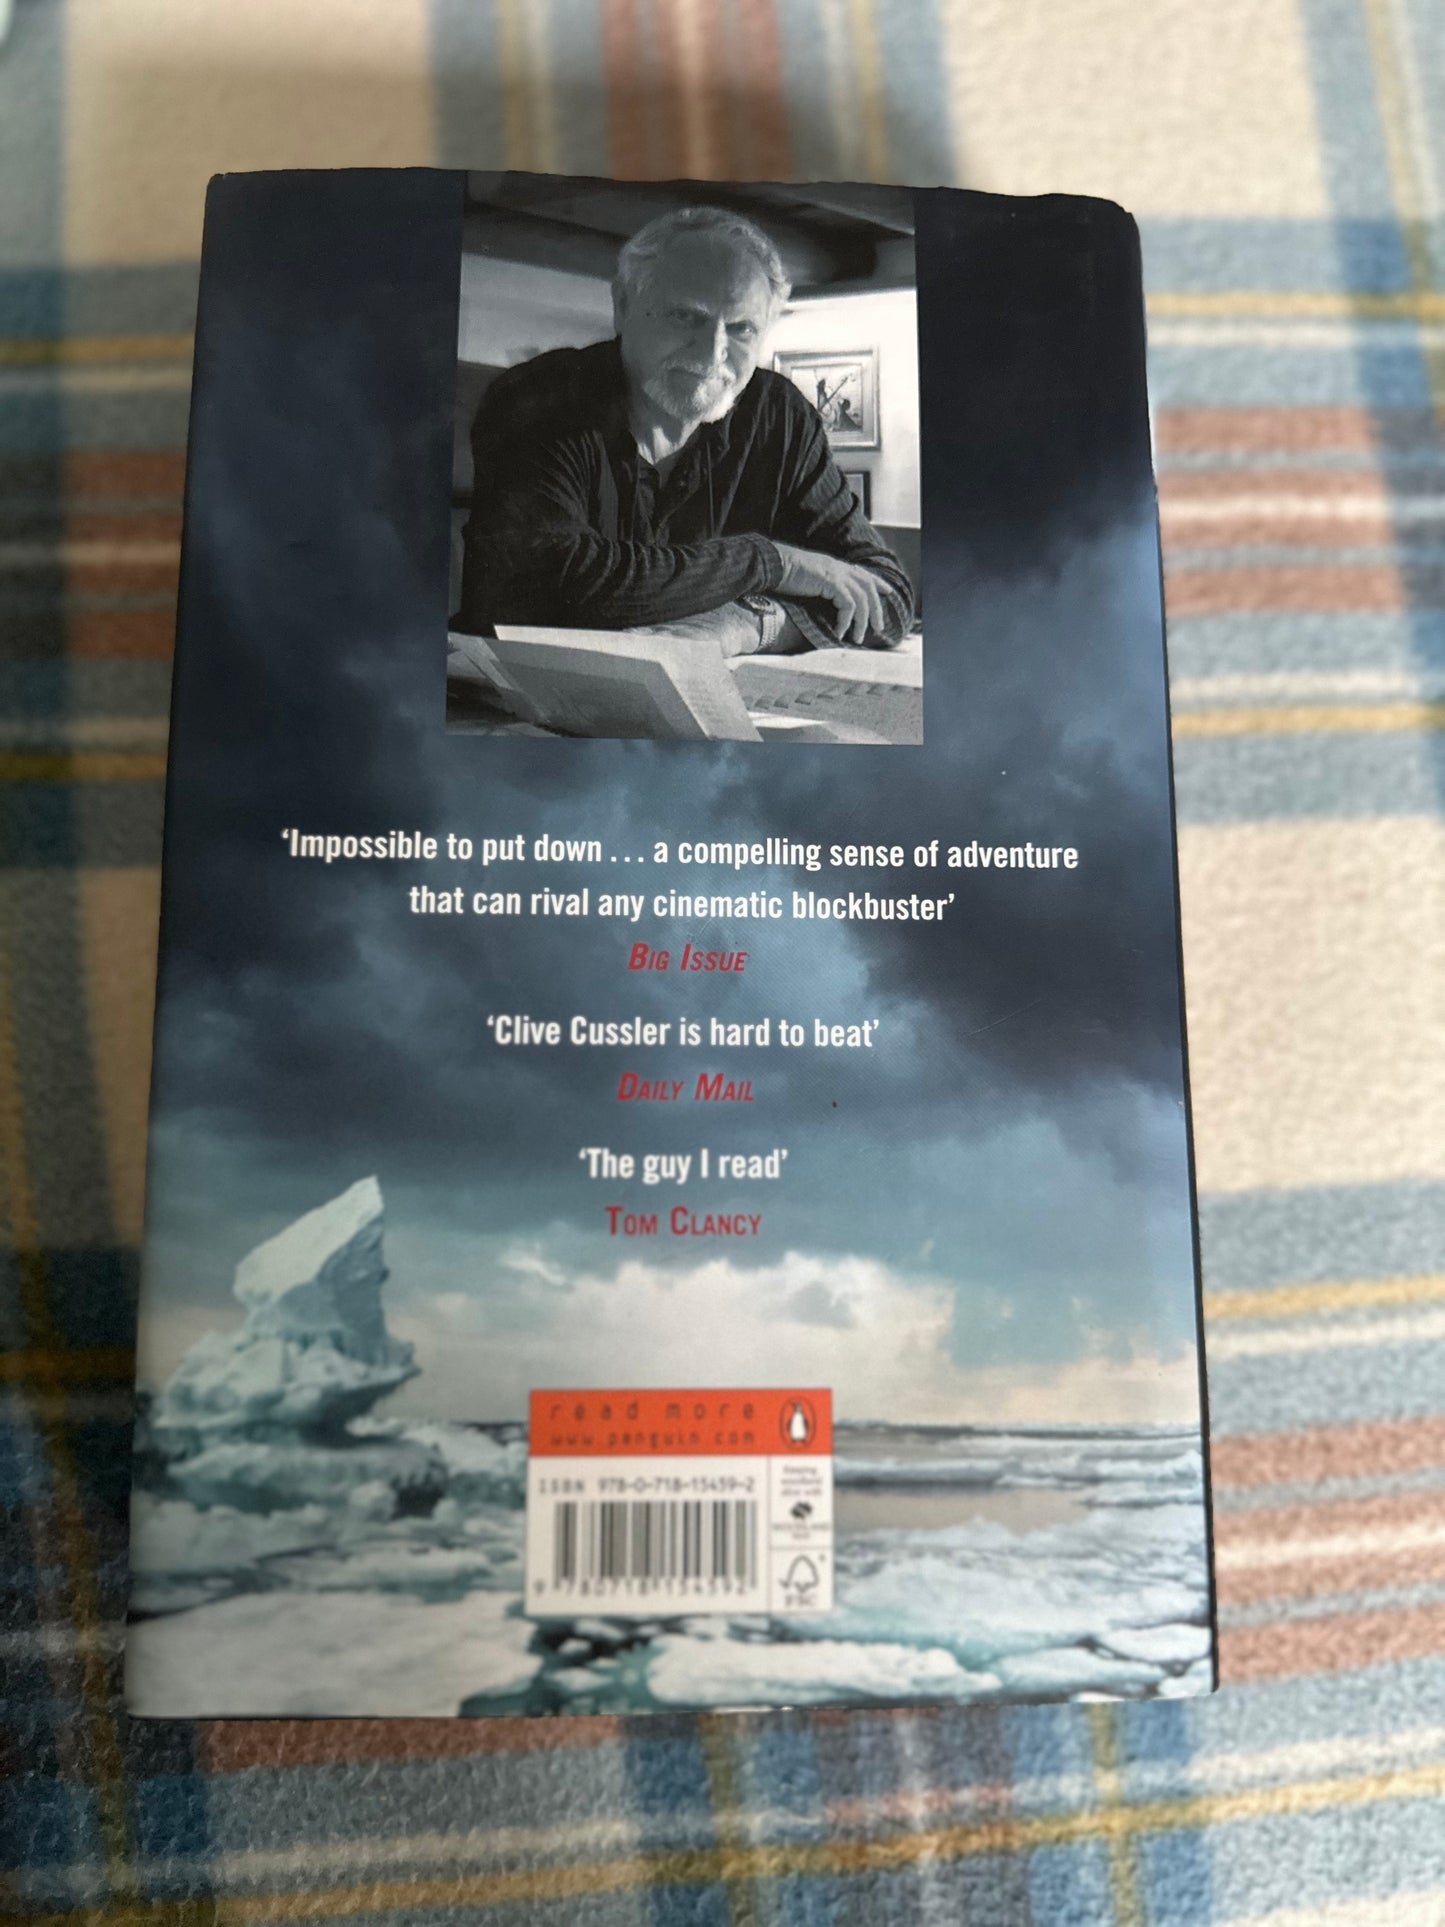 2008 Arctic Drift - Clive & Dirk Cussler(Michael Joseph/ Penguin Books)